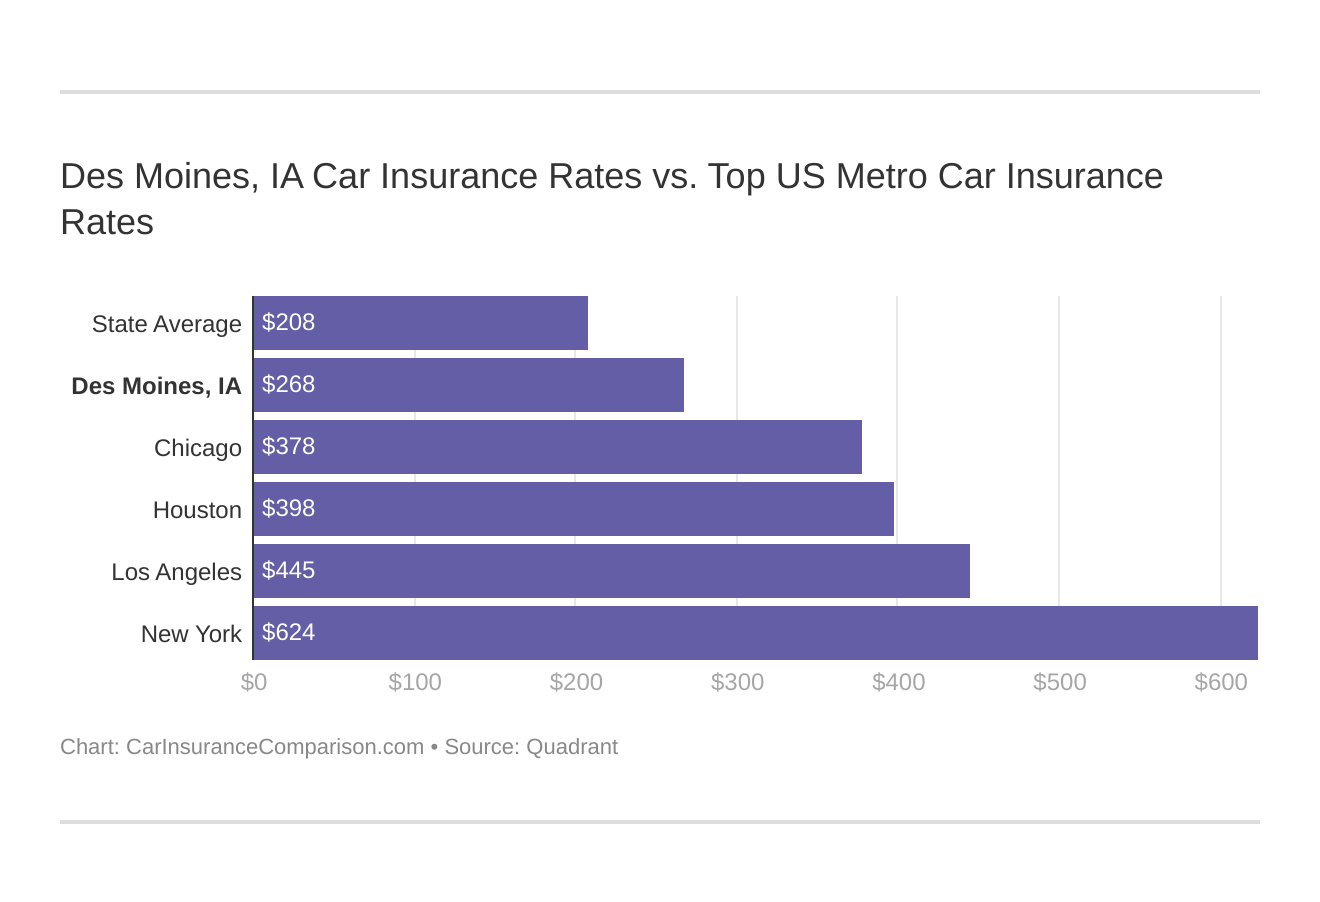 Des Moines, IA Car Insurance Rates vs. Top US Metro Car Insurance Rates